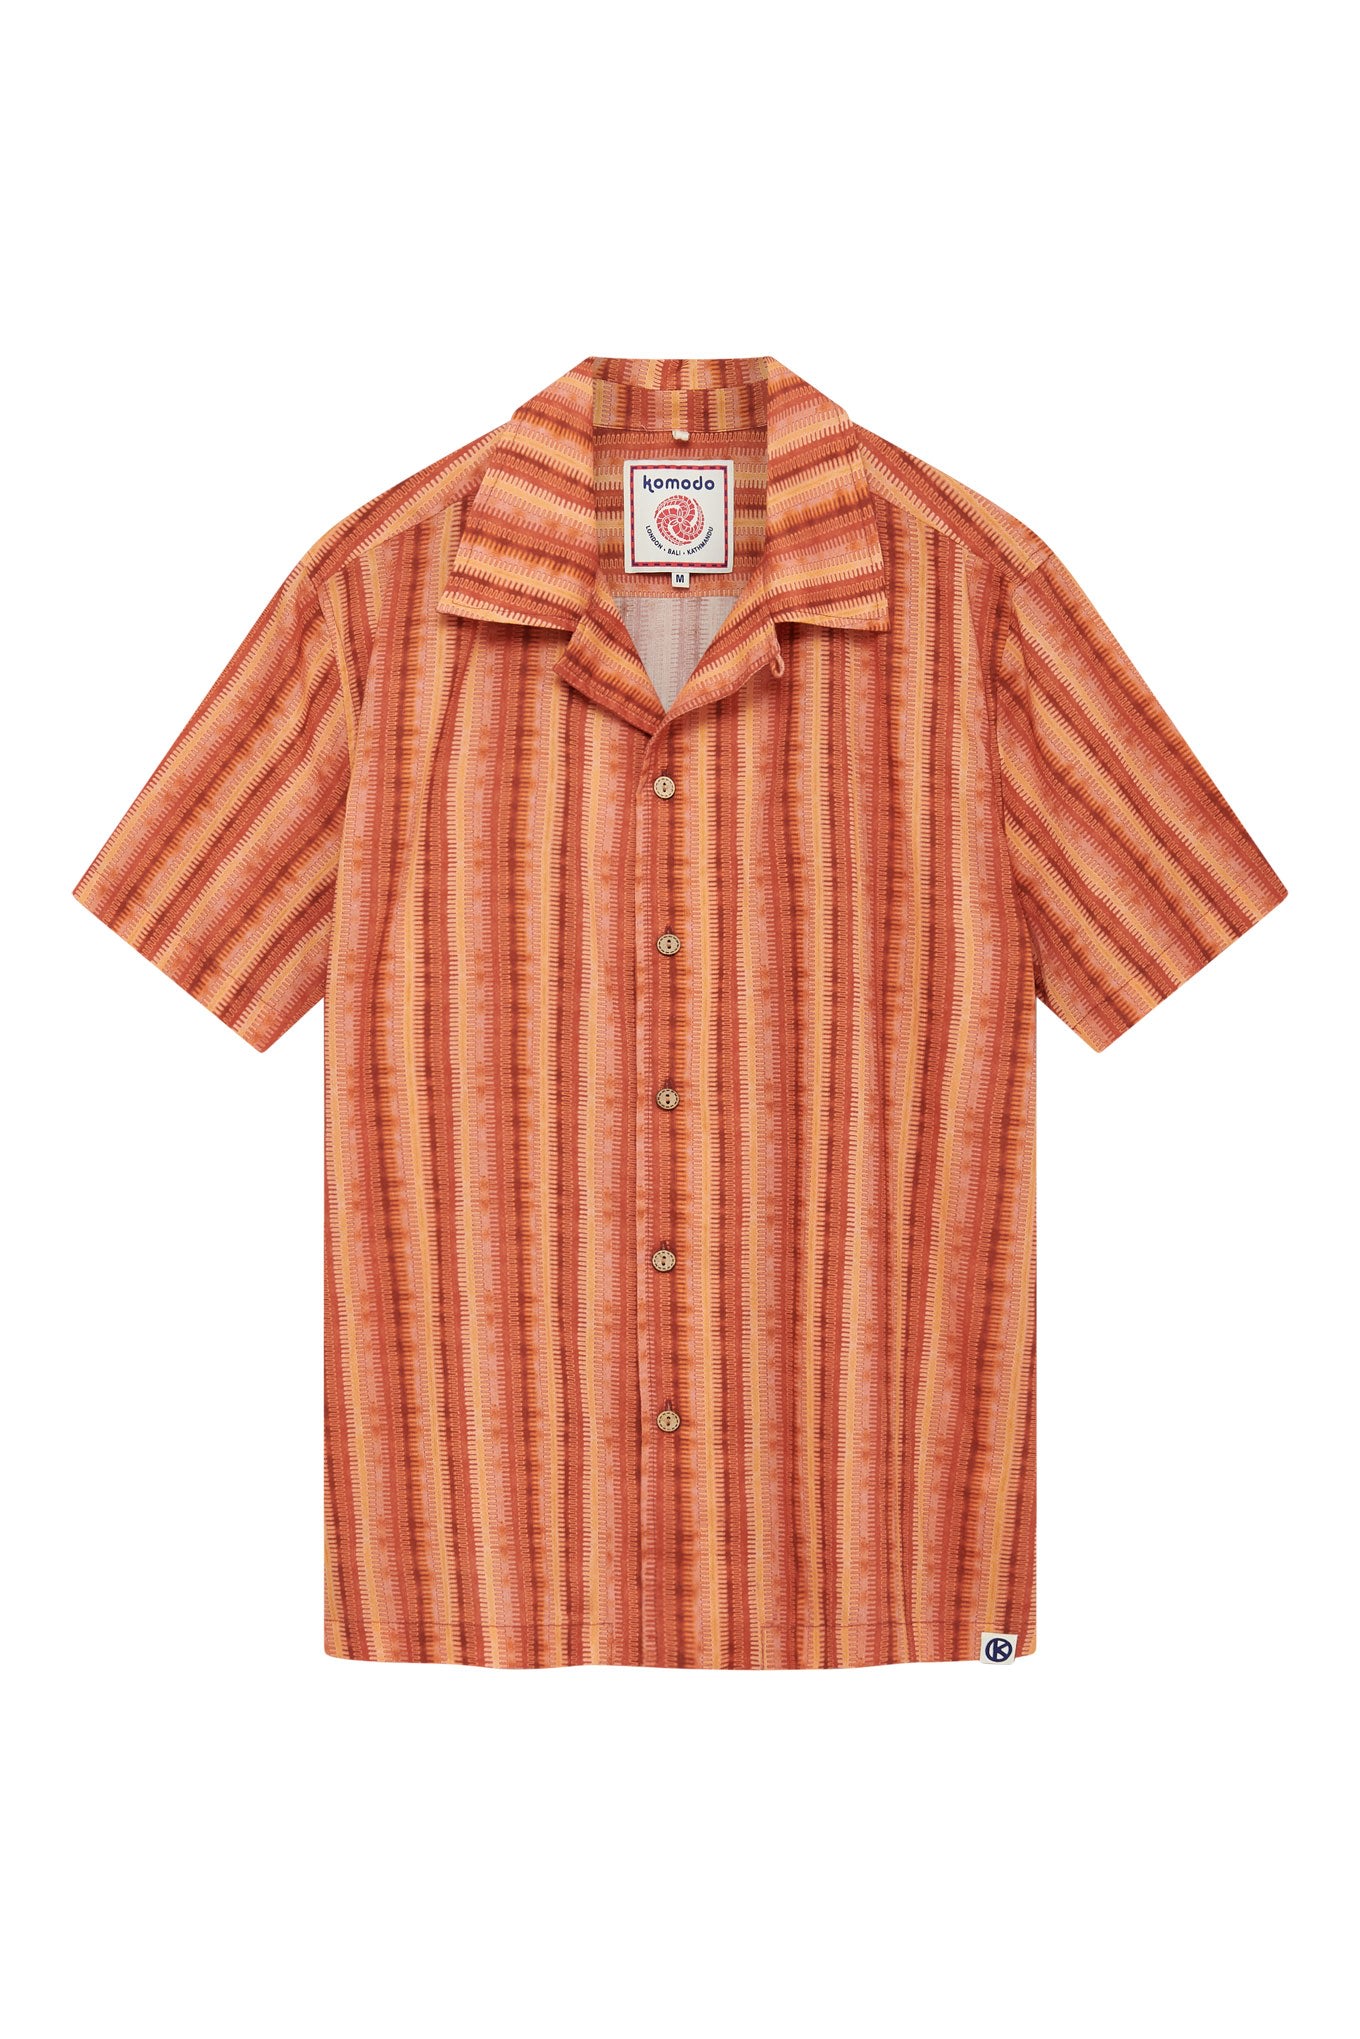 Komodo Men's Yellow / Orange Spindrift - Organic Cotton Shirt Weave Stripe Peach